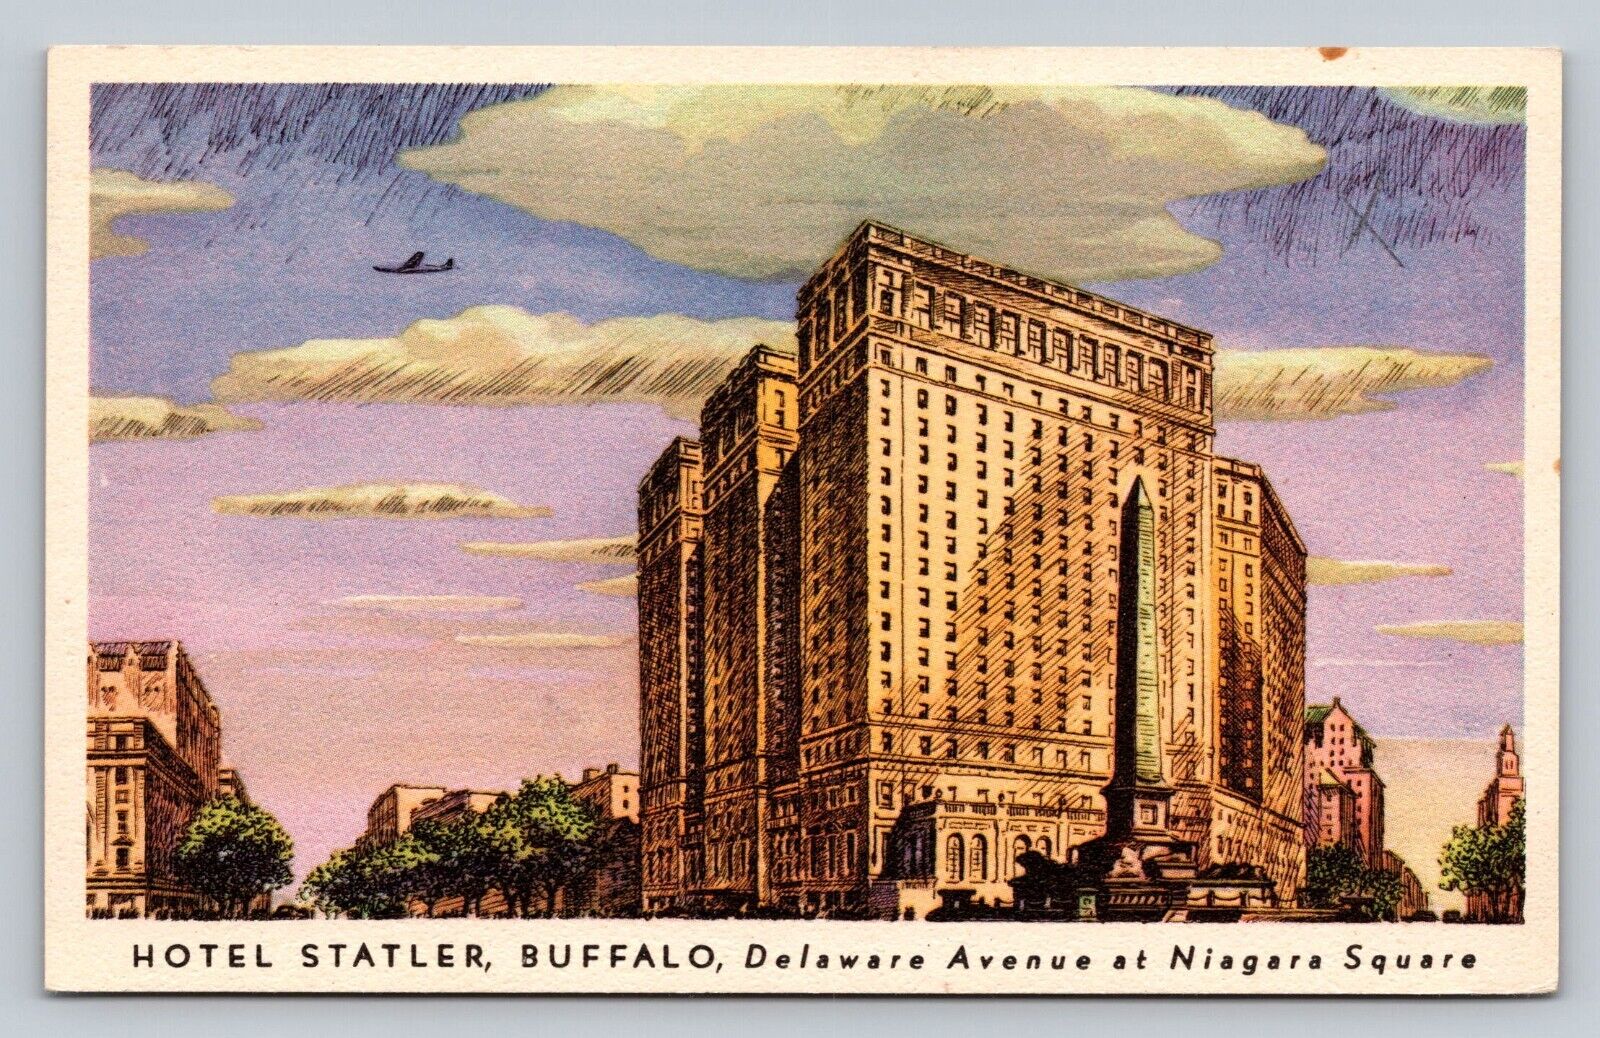 Hotel Statler Buffalo Delaware Avenue Niagara Square Vintage Advertising Postal